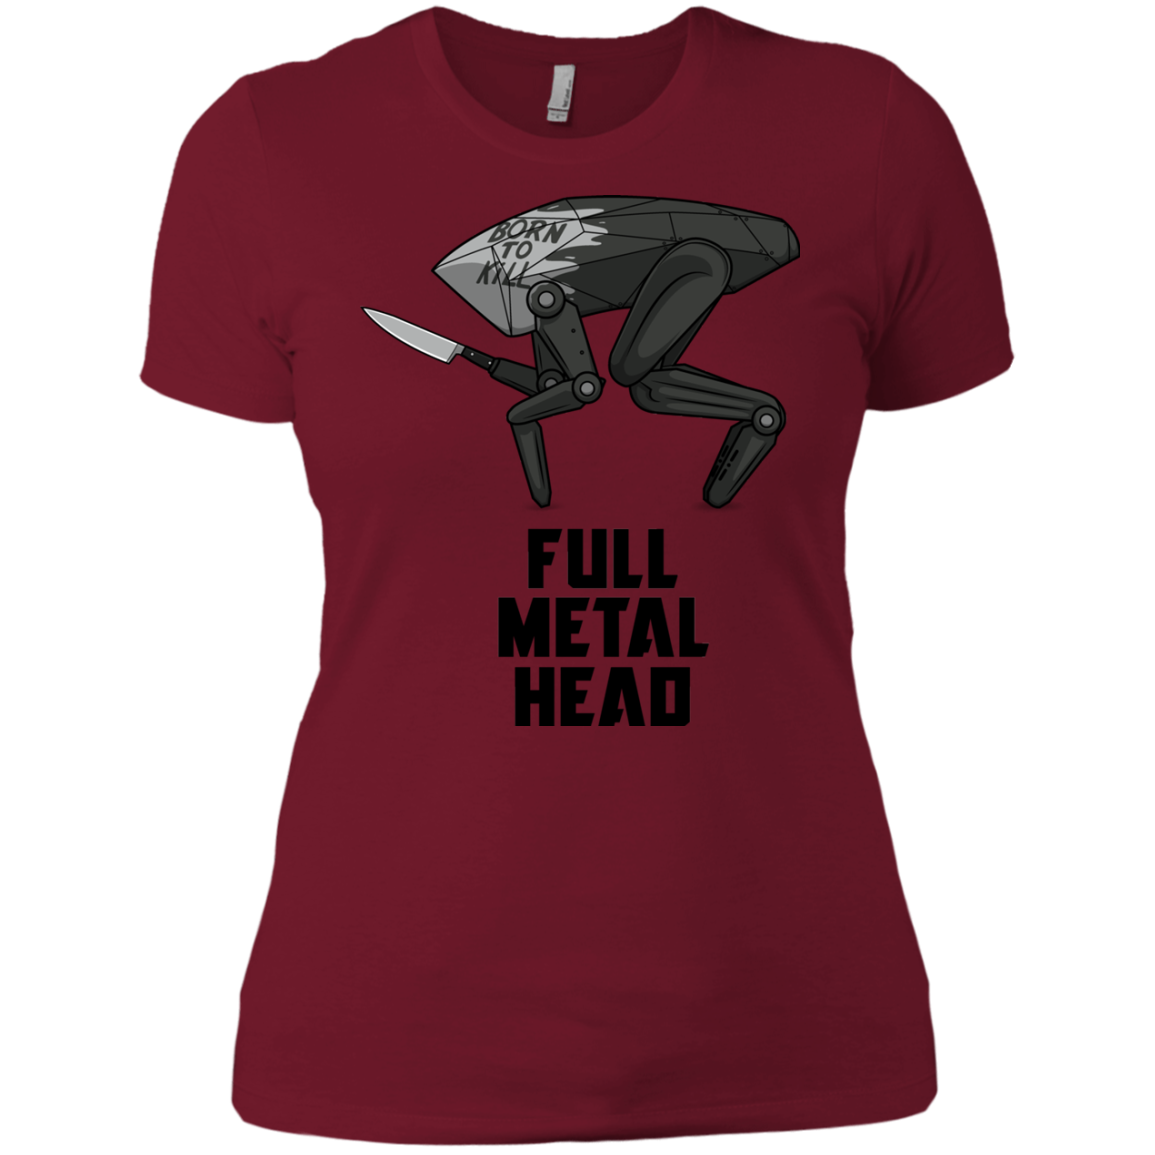 Full Metal Head Women's Premium T-Shirt